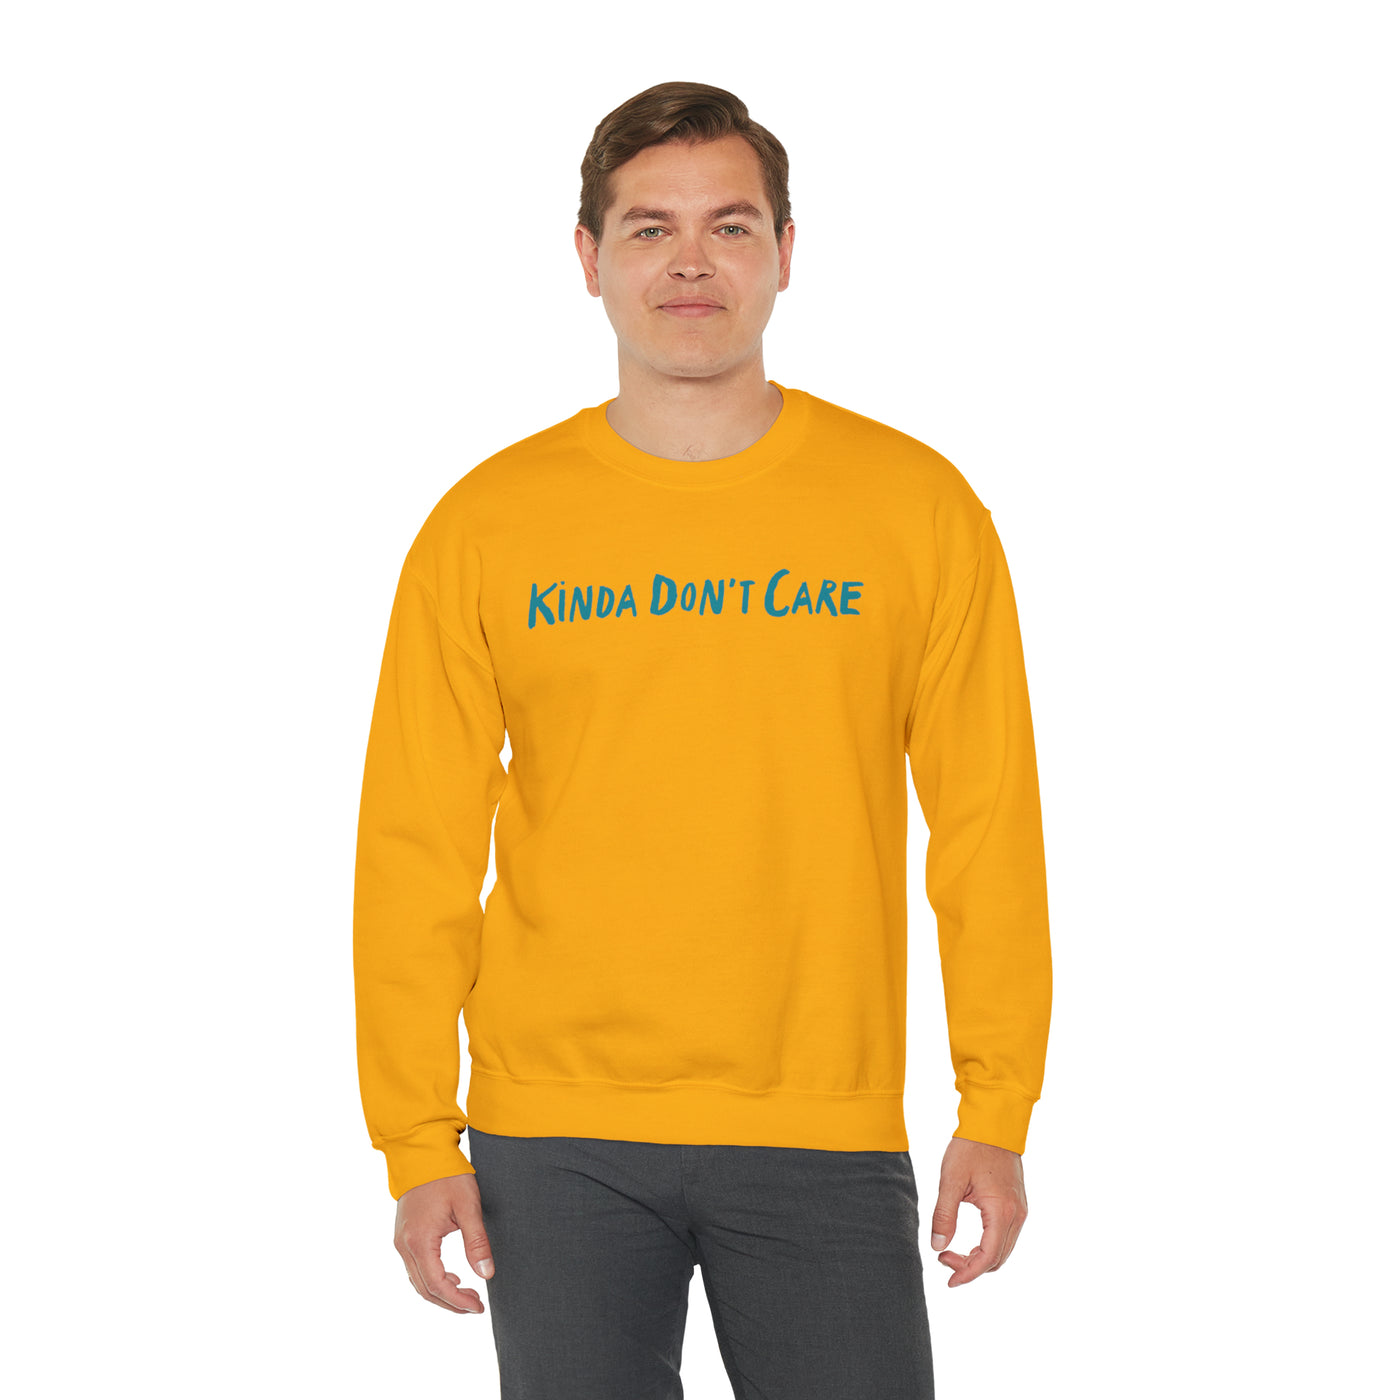 Kinda Don't Care Crewneck Sweatshirt